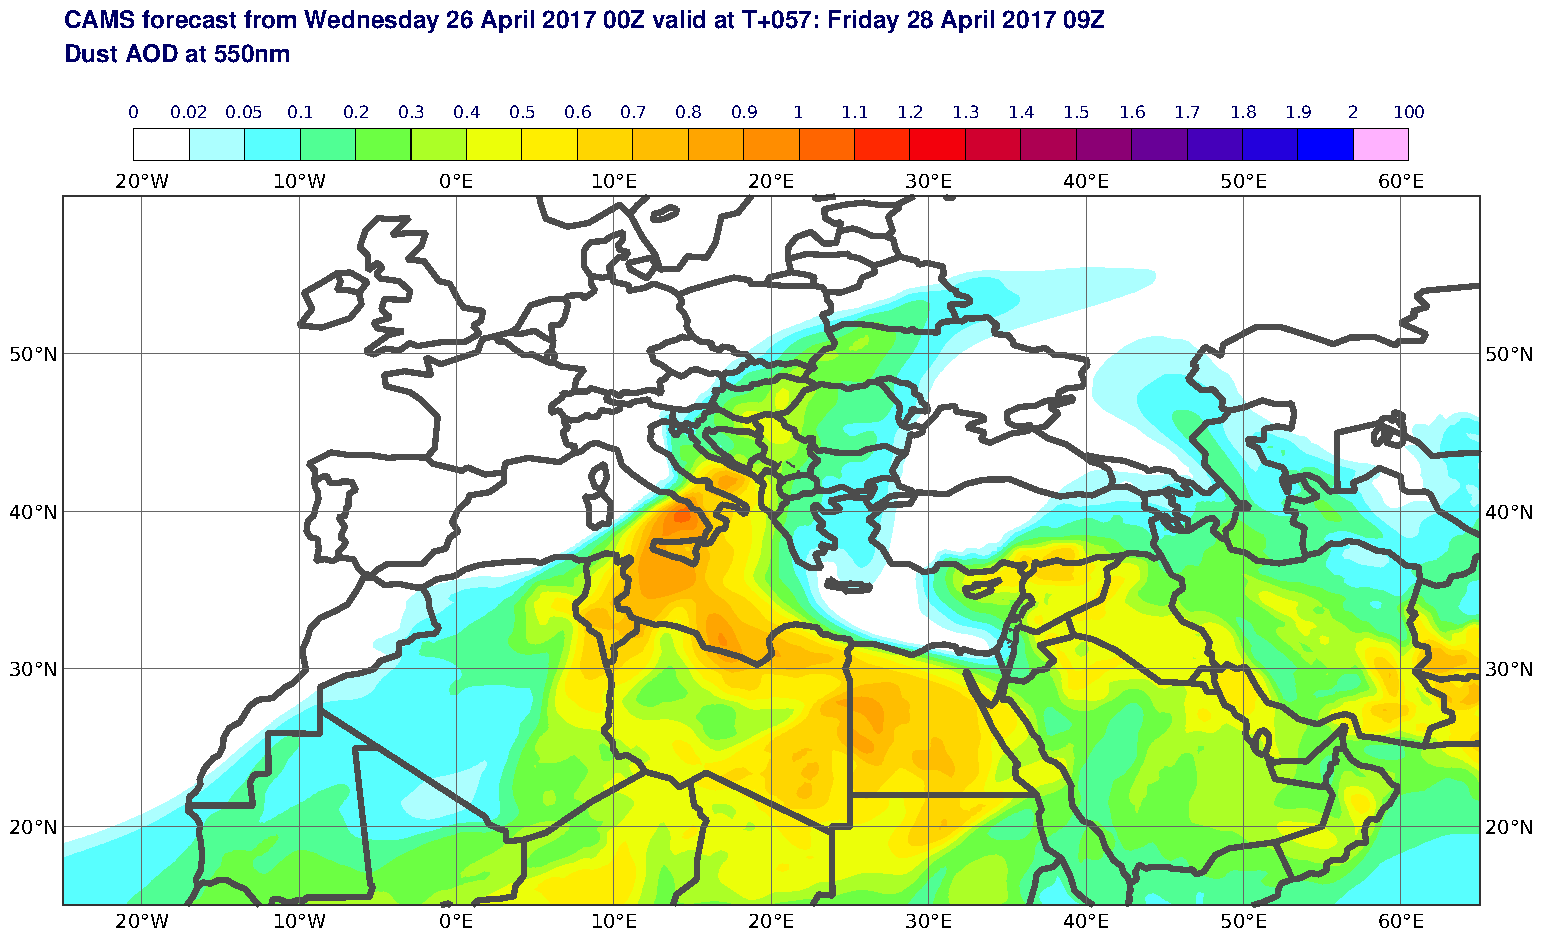 Dust AOD at 550nm valid at T57 - 2017-04-28 09:00